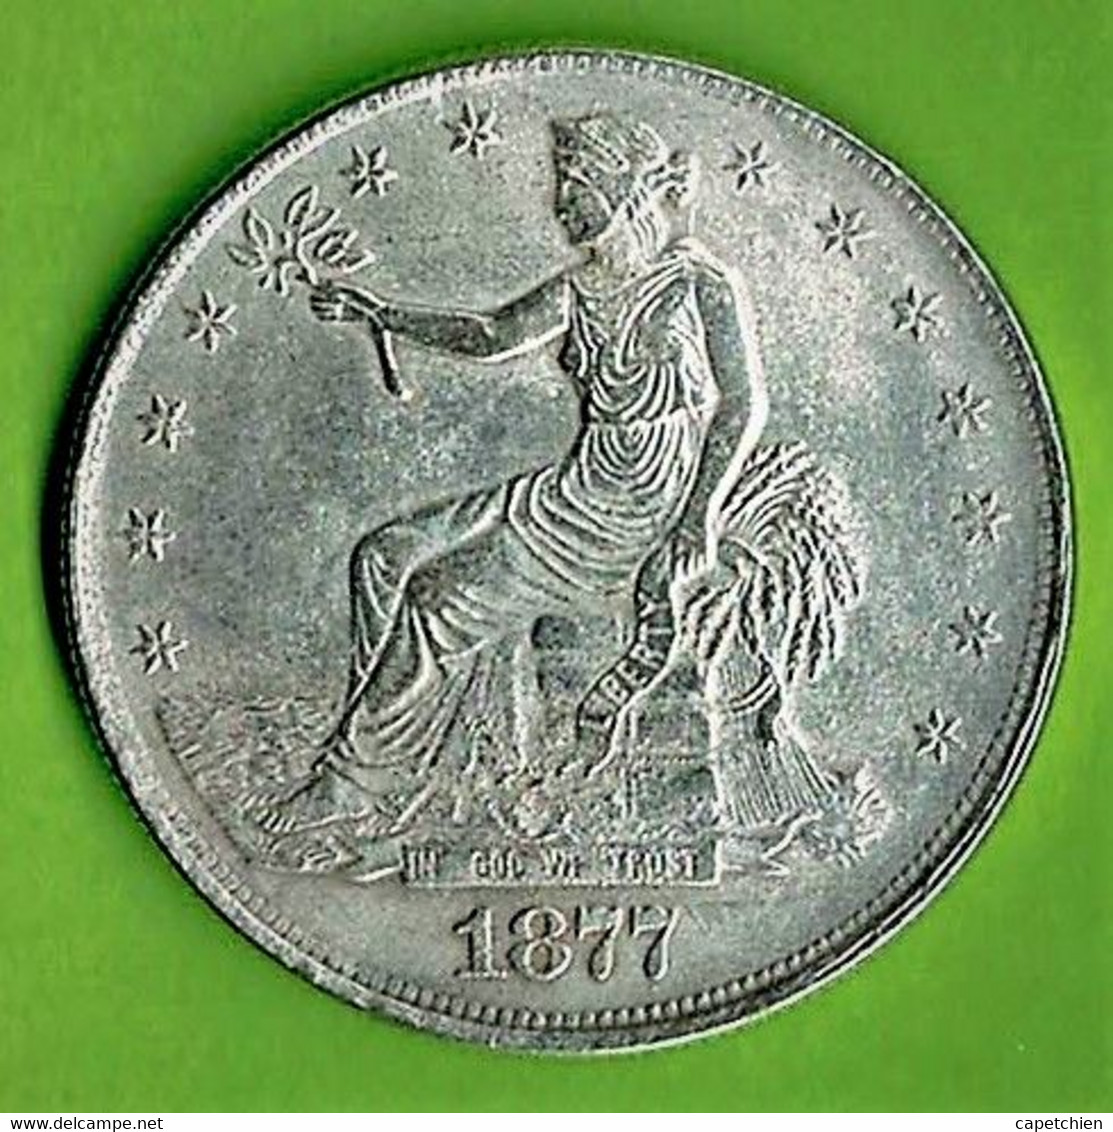 USA / 1 DOLLAR / 1877 / FAUX ( D'origine Asiatique ) ) FALSCHGELD / FAKE COIN - 1873-1885: Trade Dollars (Dollar De Commerce)